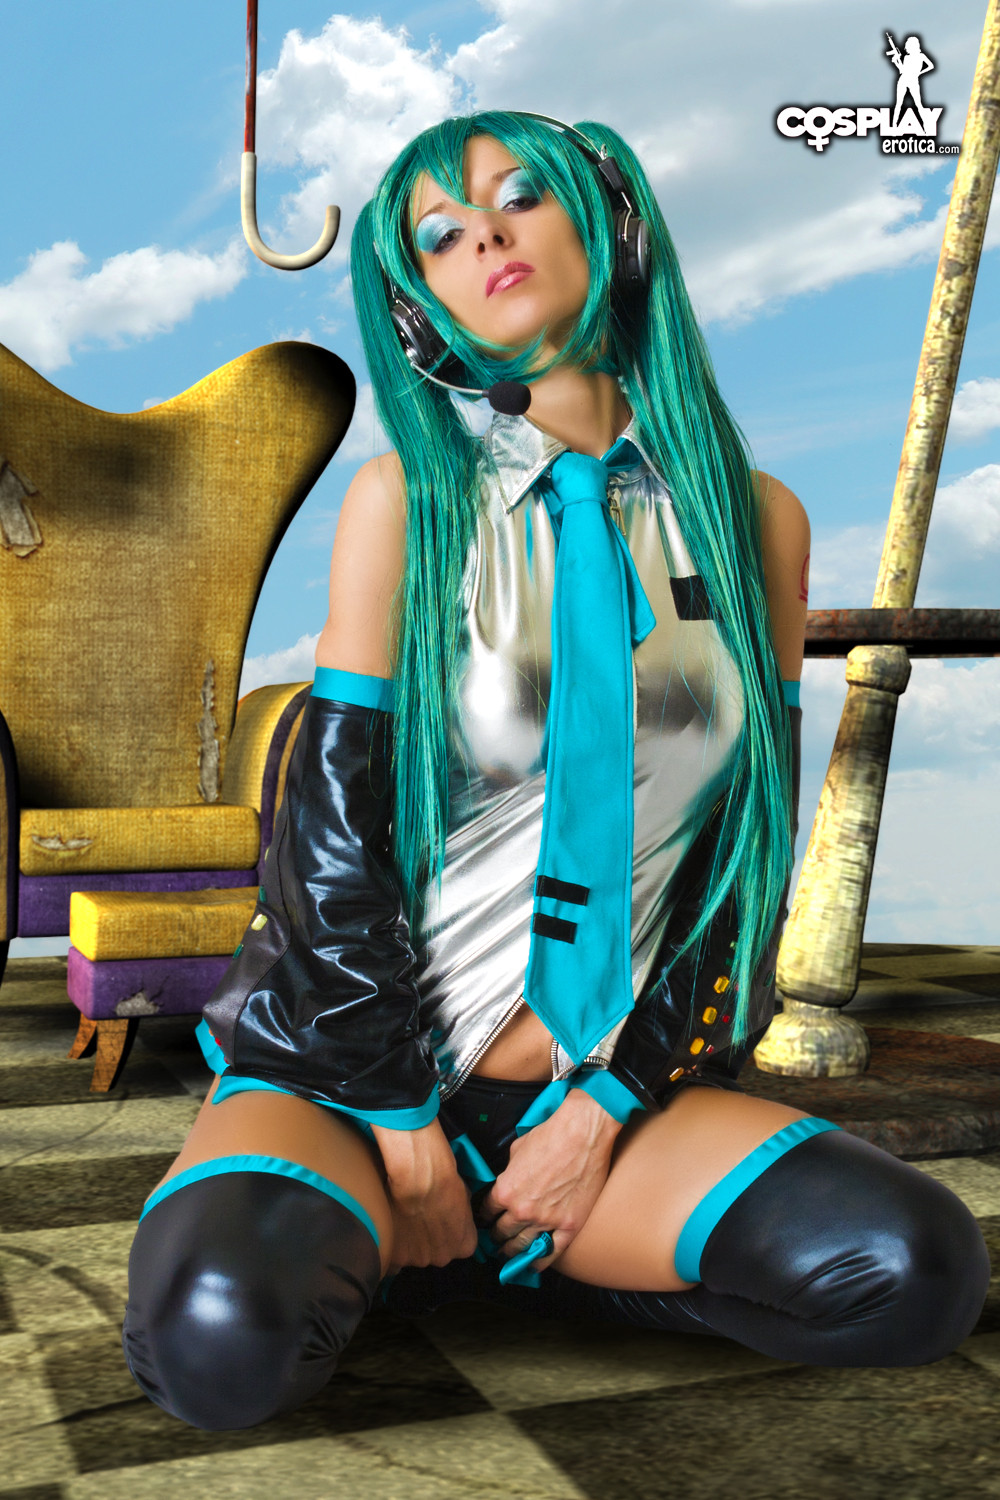 Erotico cosplay Lana in lunga parrucca verde e uniforme anime
 #67371435